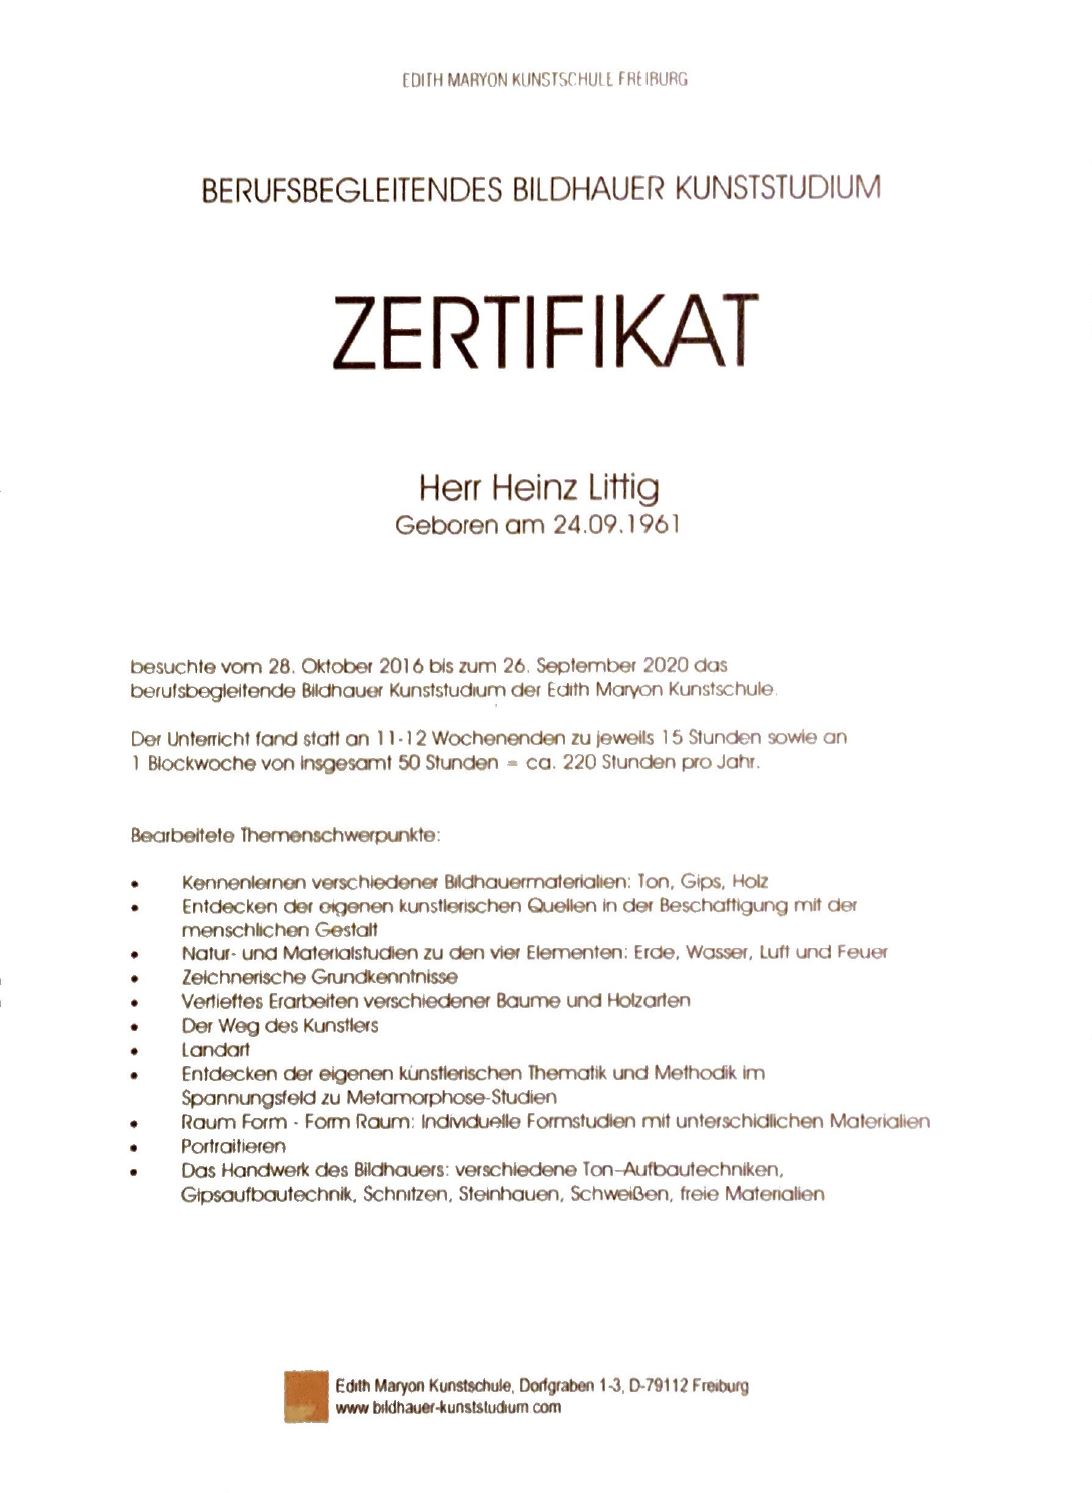 Heinz Littig Bildhauer Kunststudium Zertifikat EKM